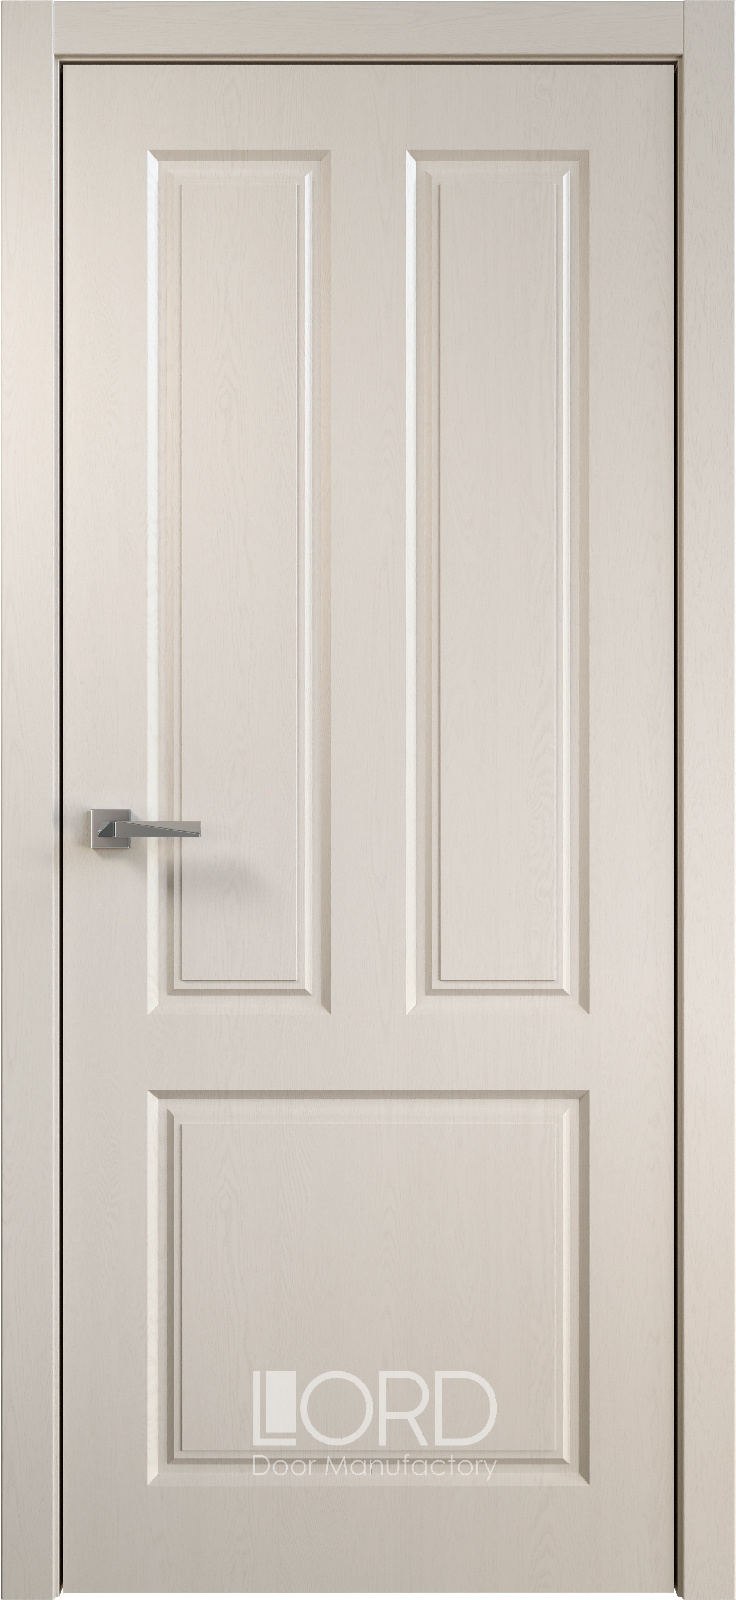 Лорд Межкомнатная дверь K 16 ДГ, арт. 22853 - фото №1